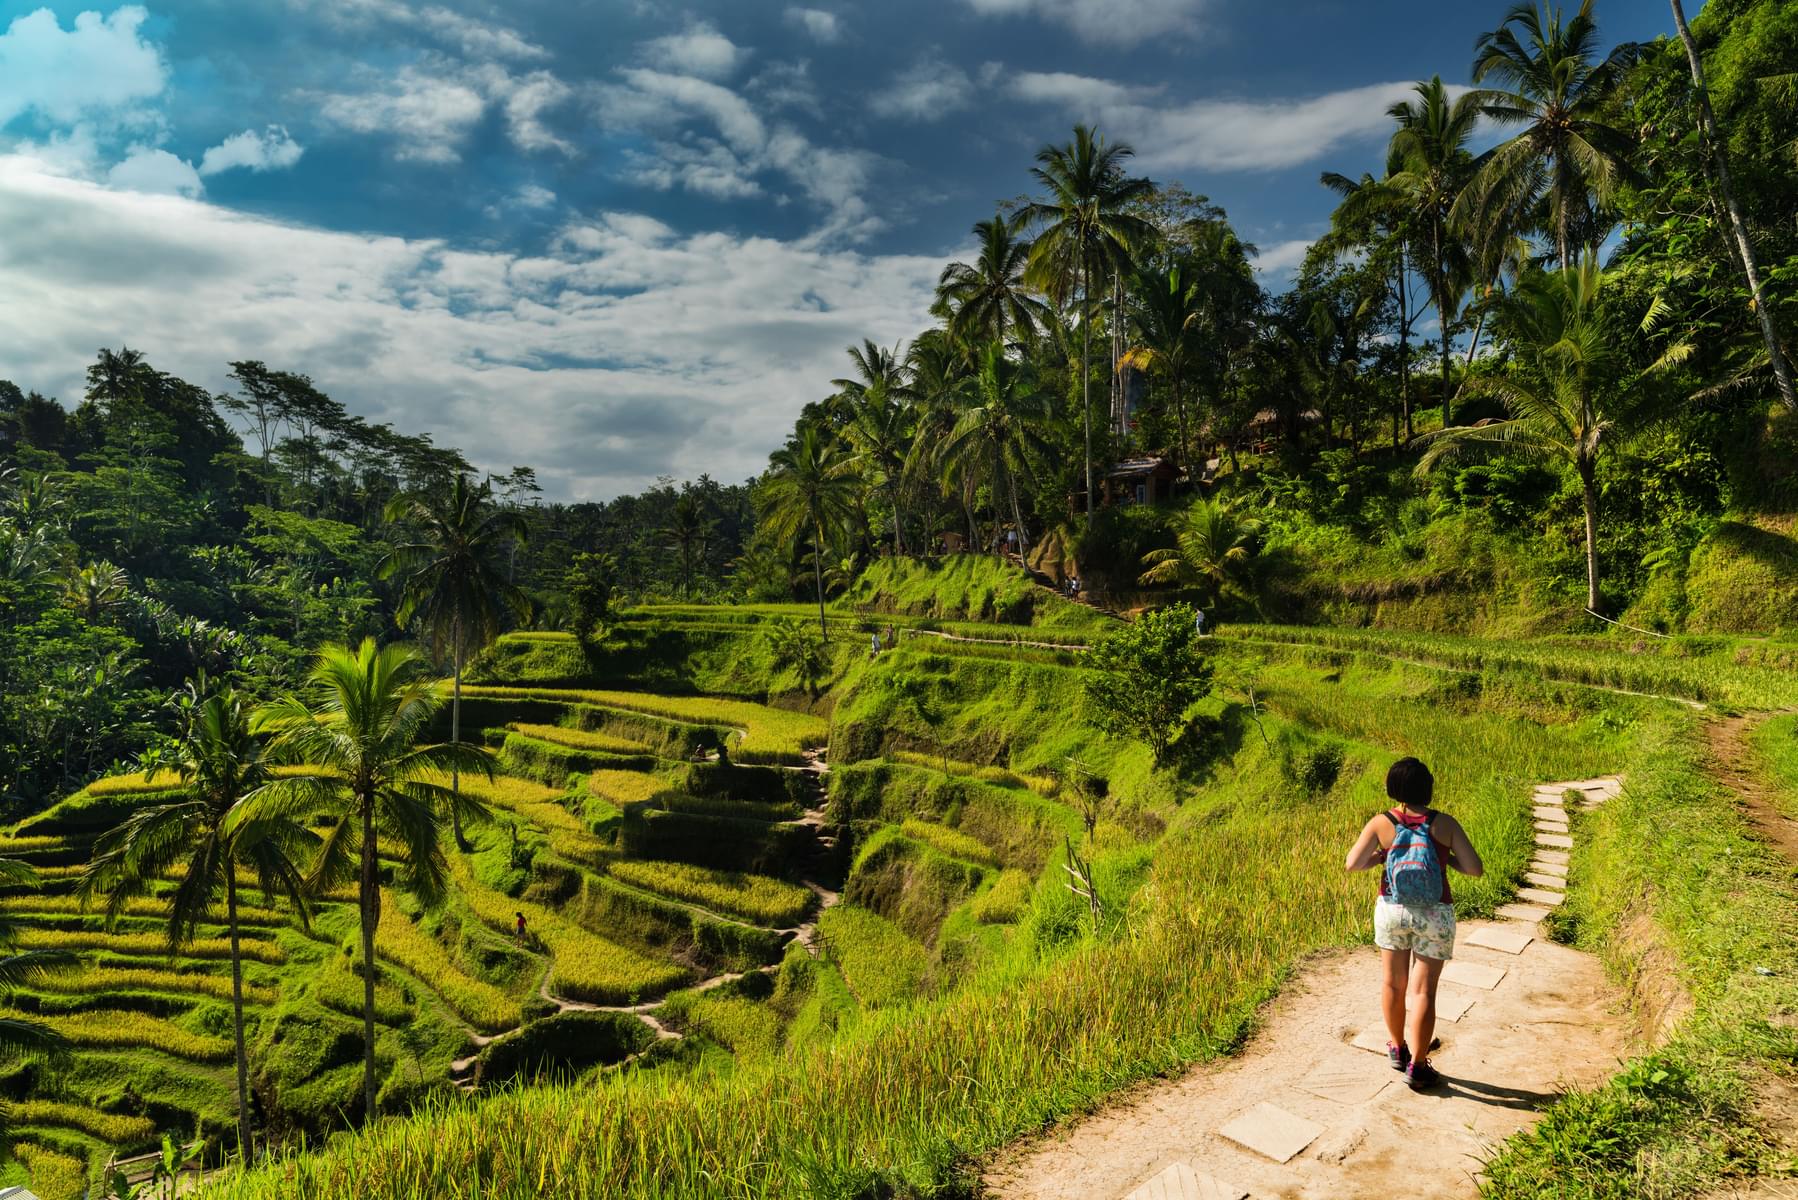 Explore the Tegalalang Rice Terrace